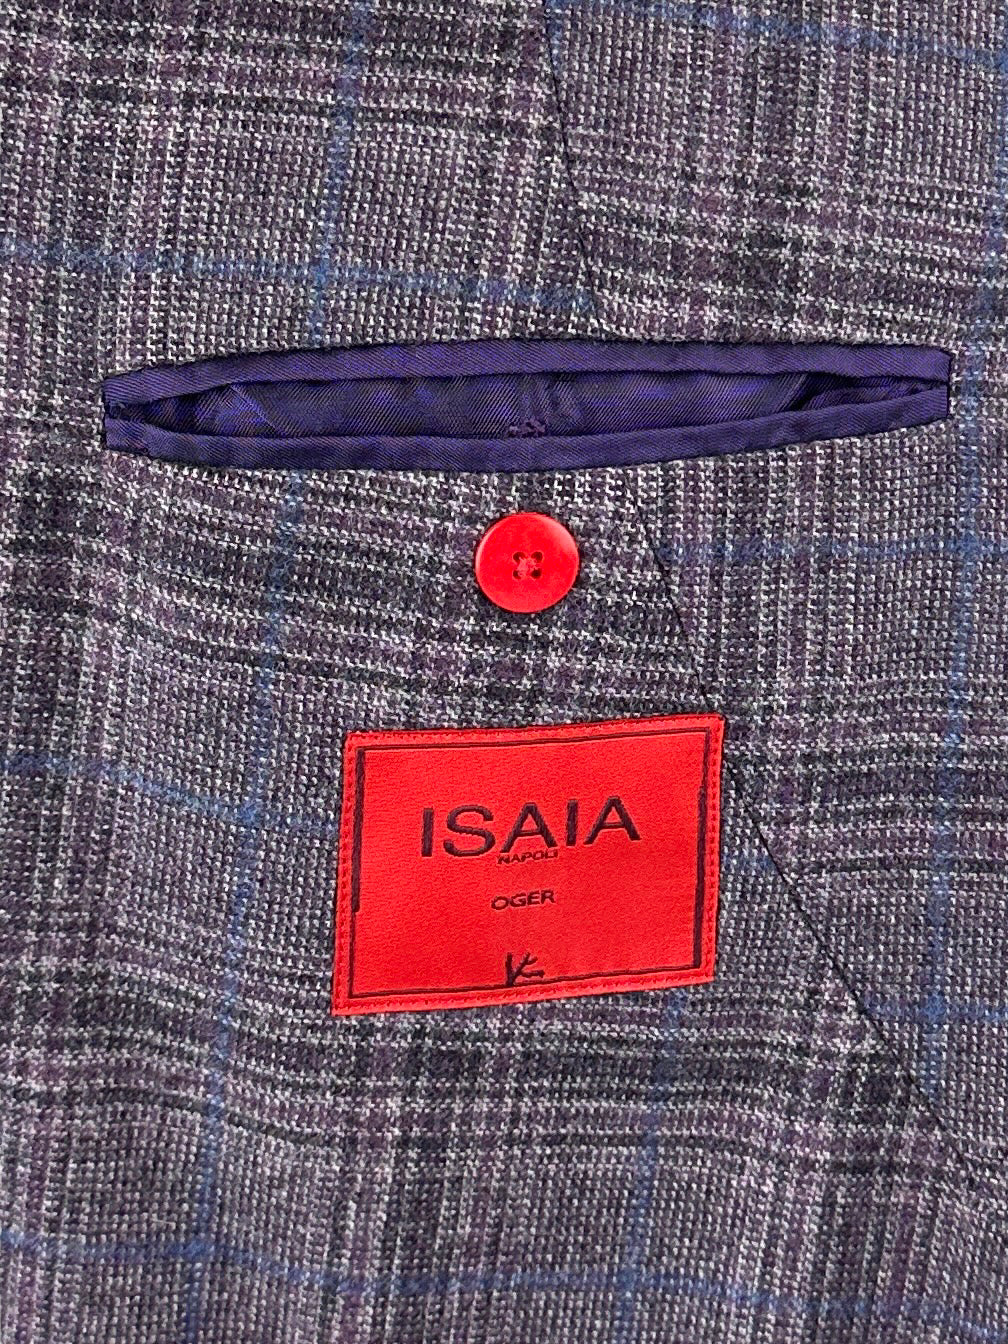 Isaia Purple Overcheck Wool Jacket